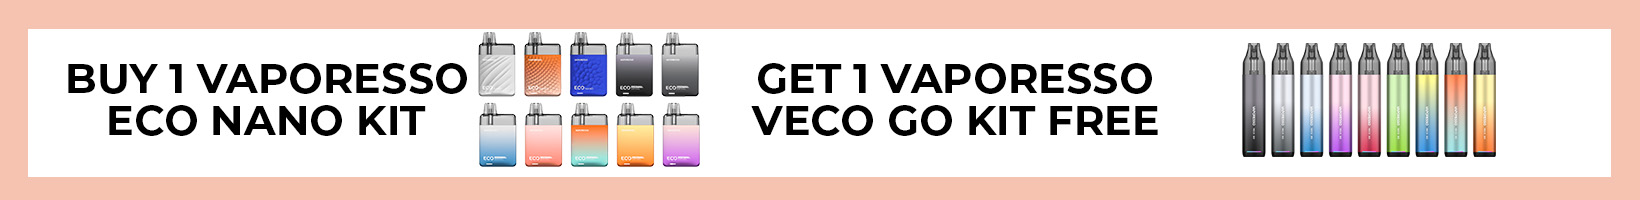 Buy the EcoNano Get the Veco Go Free